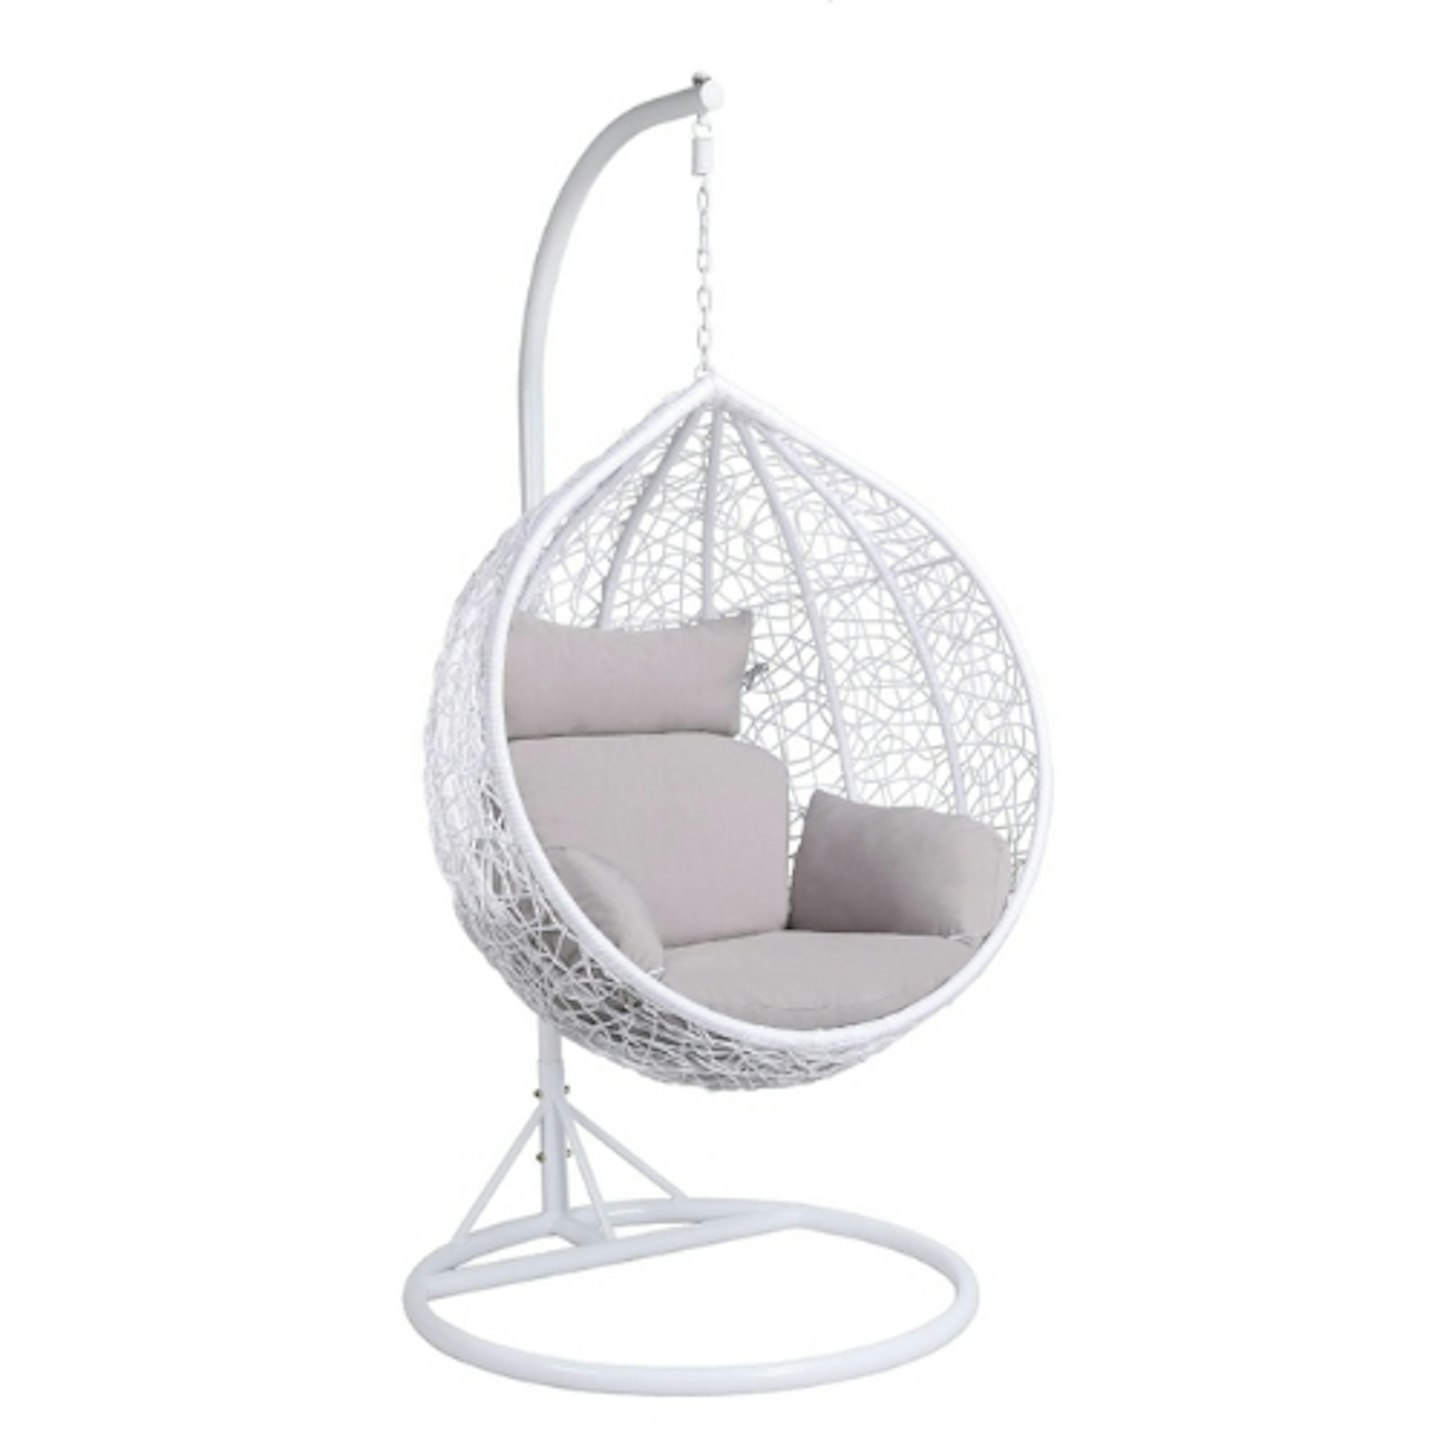 Yaheetech Garden Egg Swing Chair